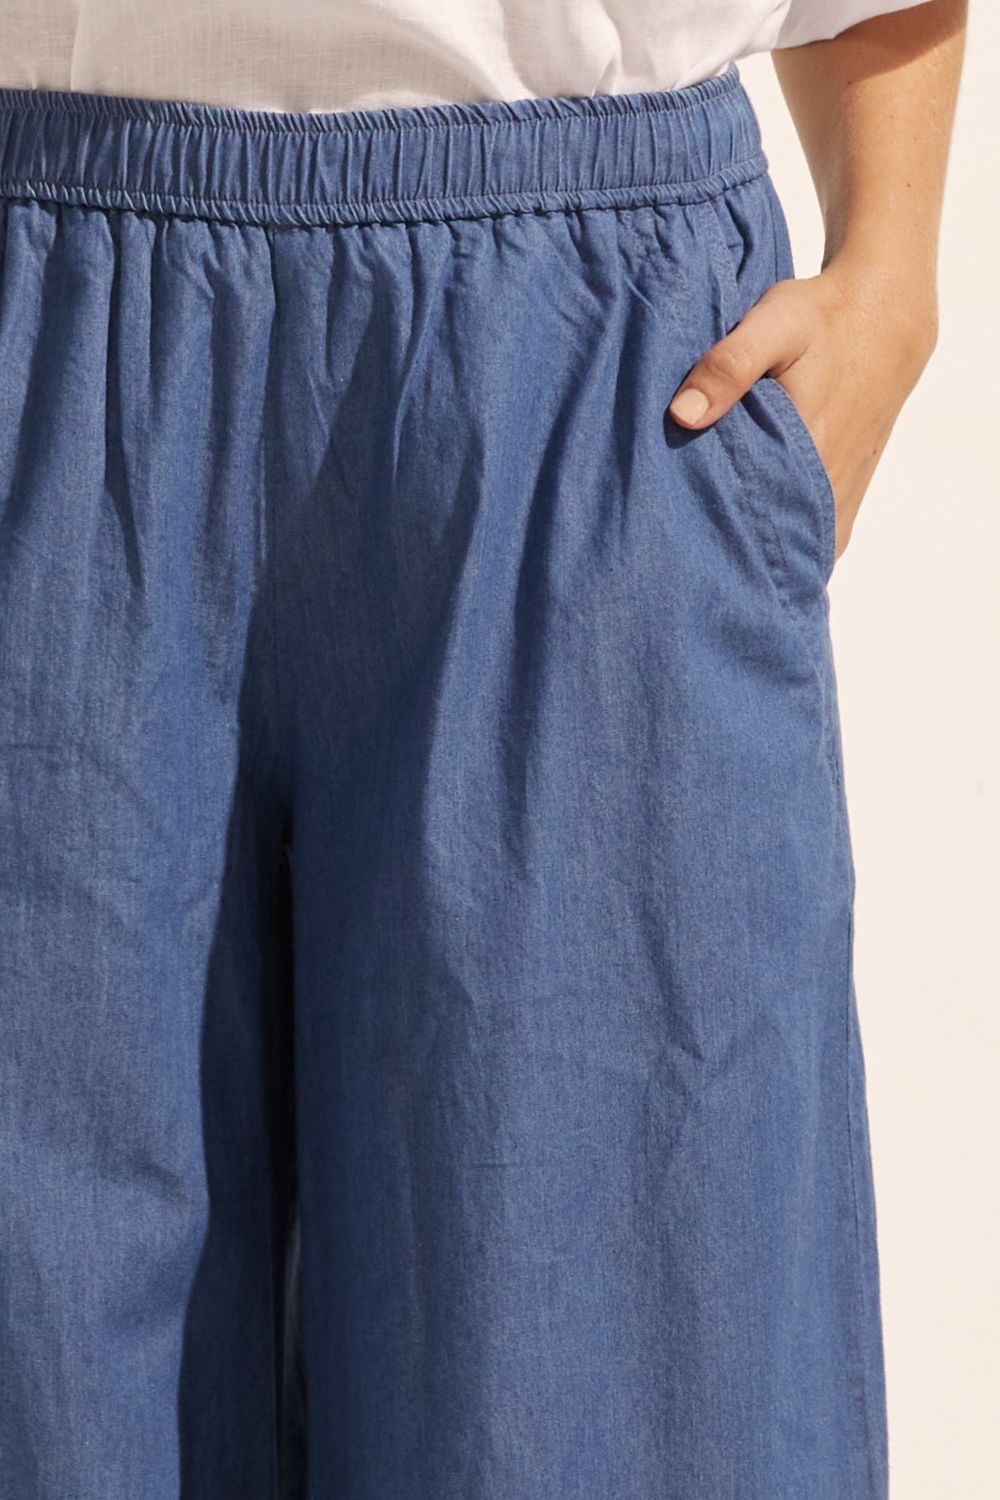 blue, pants, elasticated waist, side pockets, wide leg, close up image